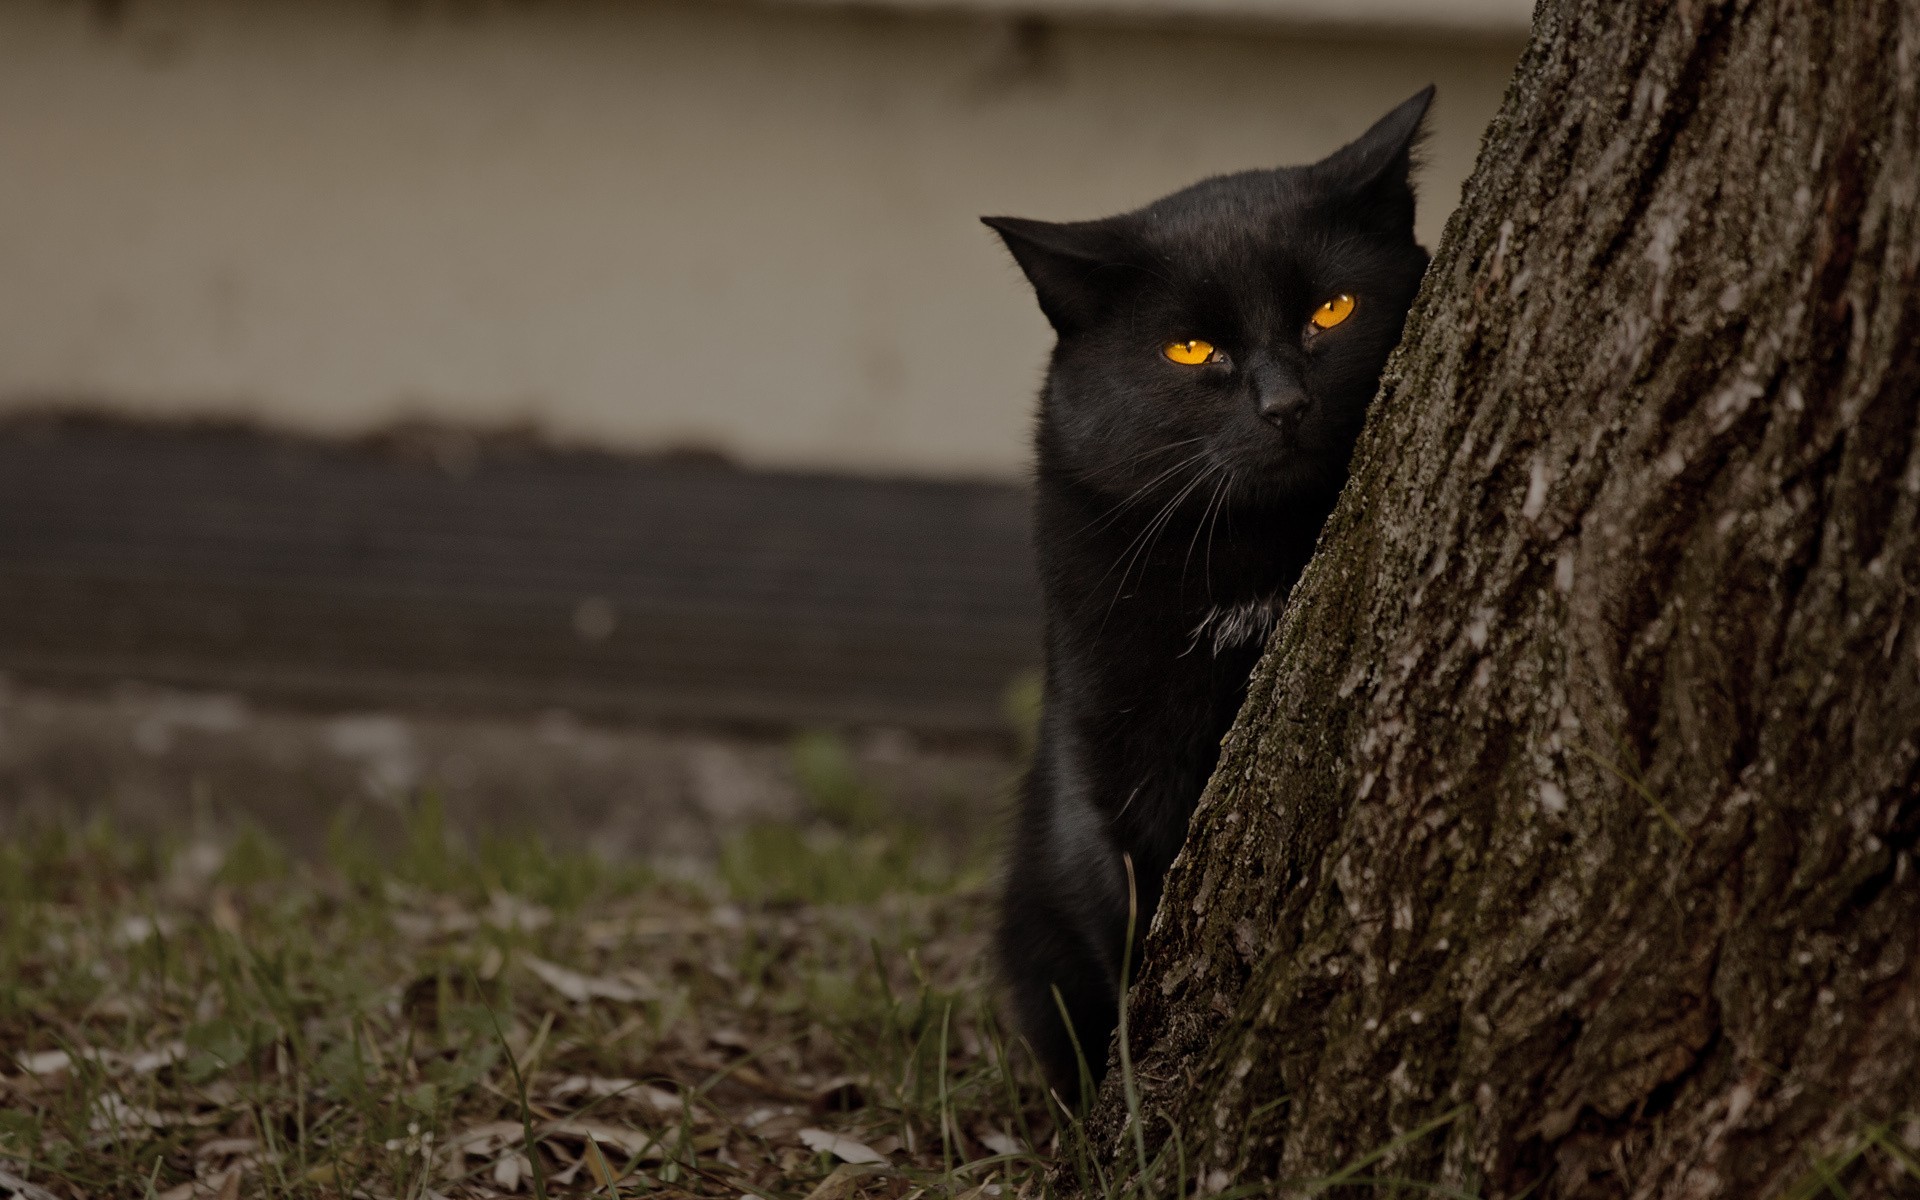 Fotografie de pisici negre cu ochi galbeni